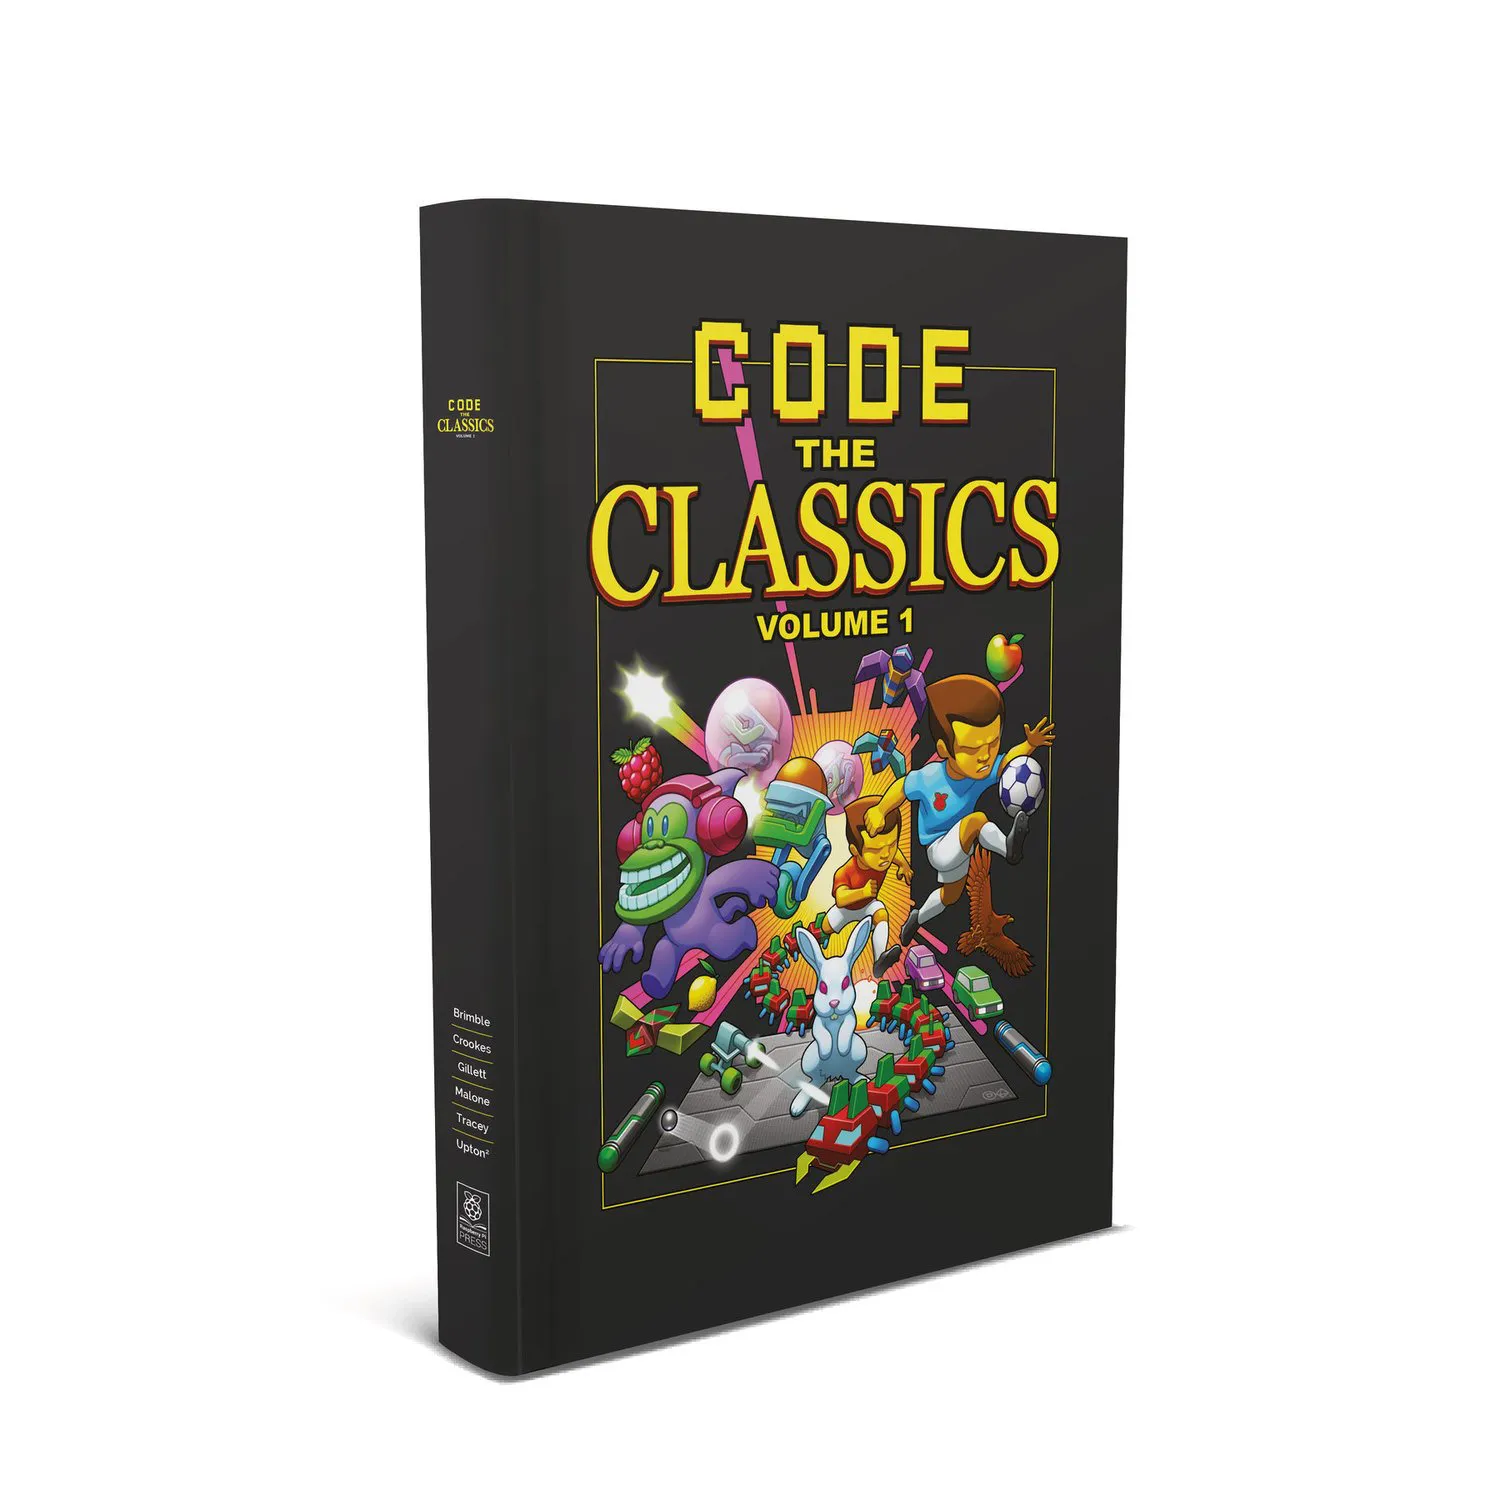 Photo of Code the Classics Volume 1